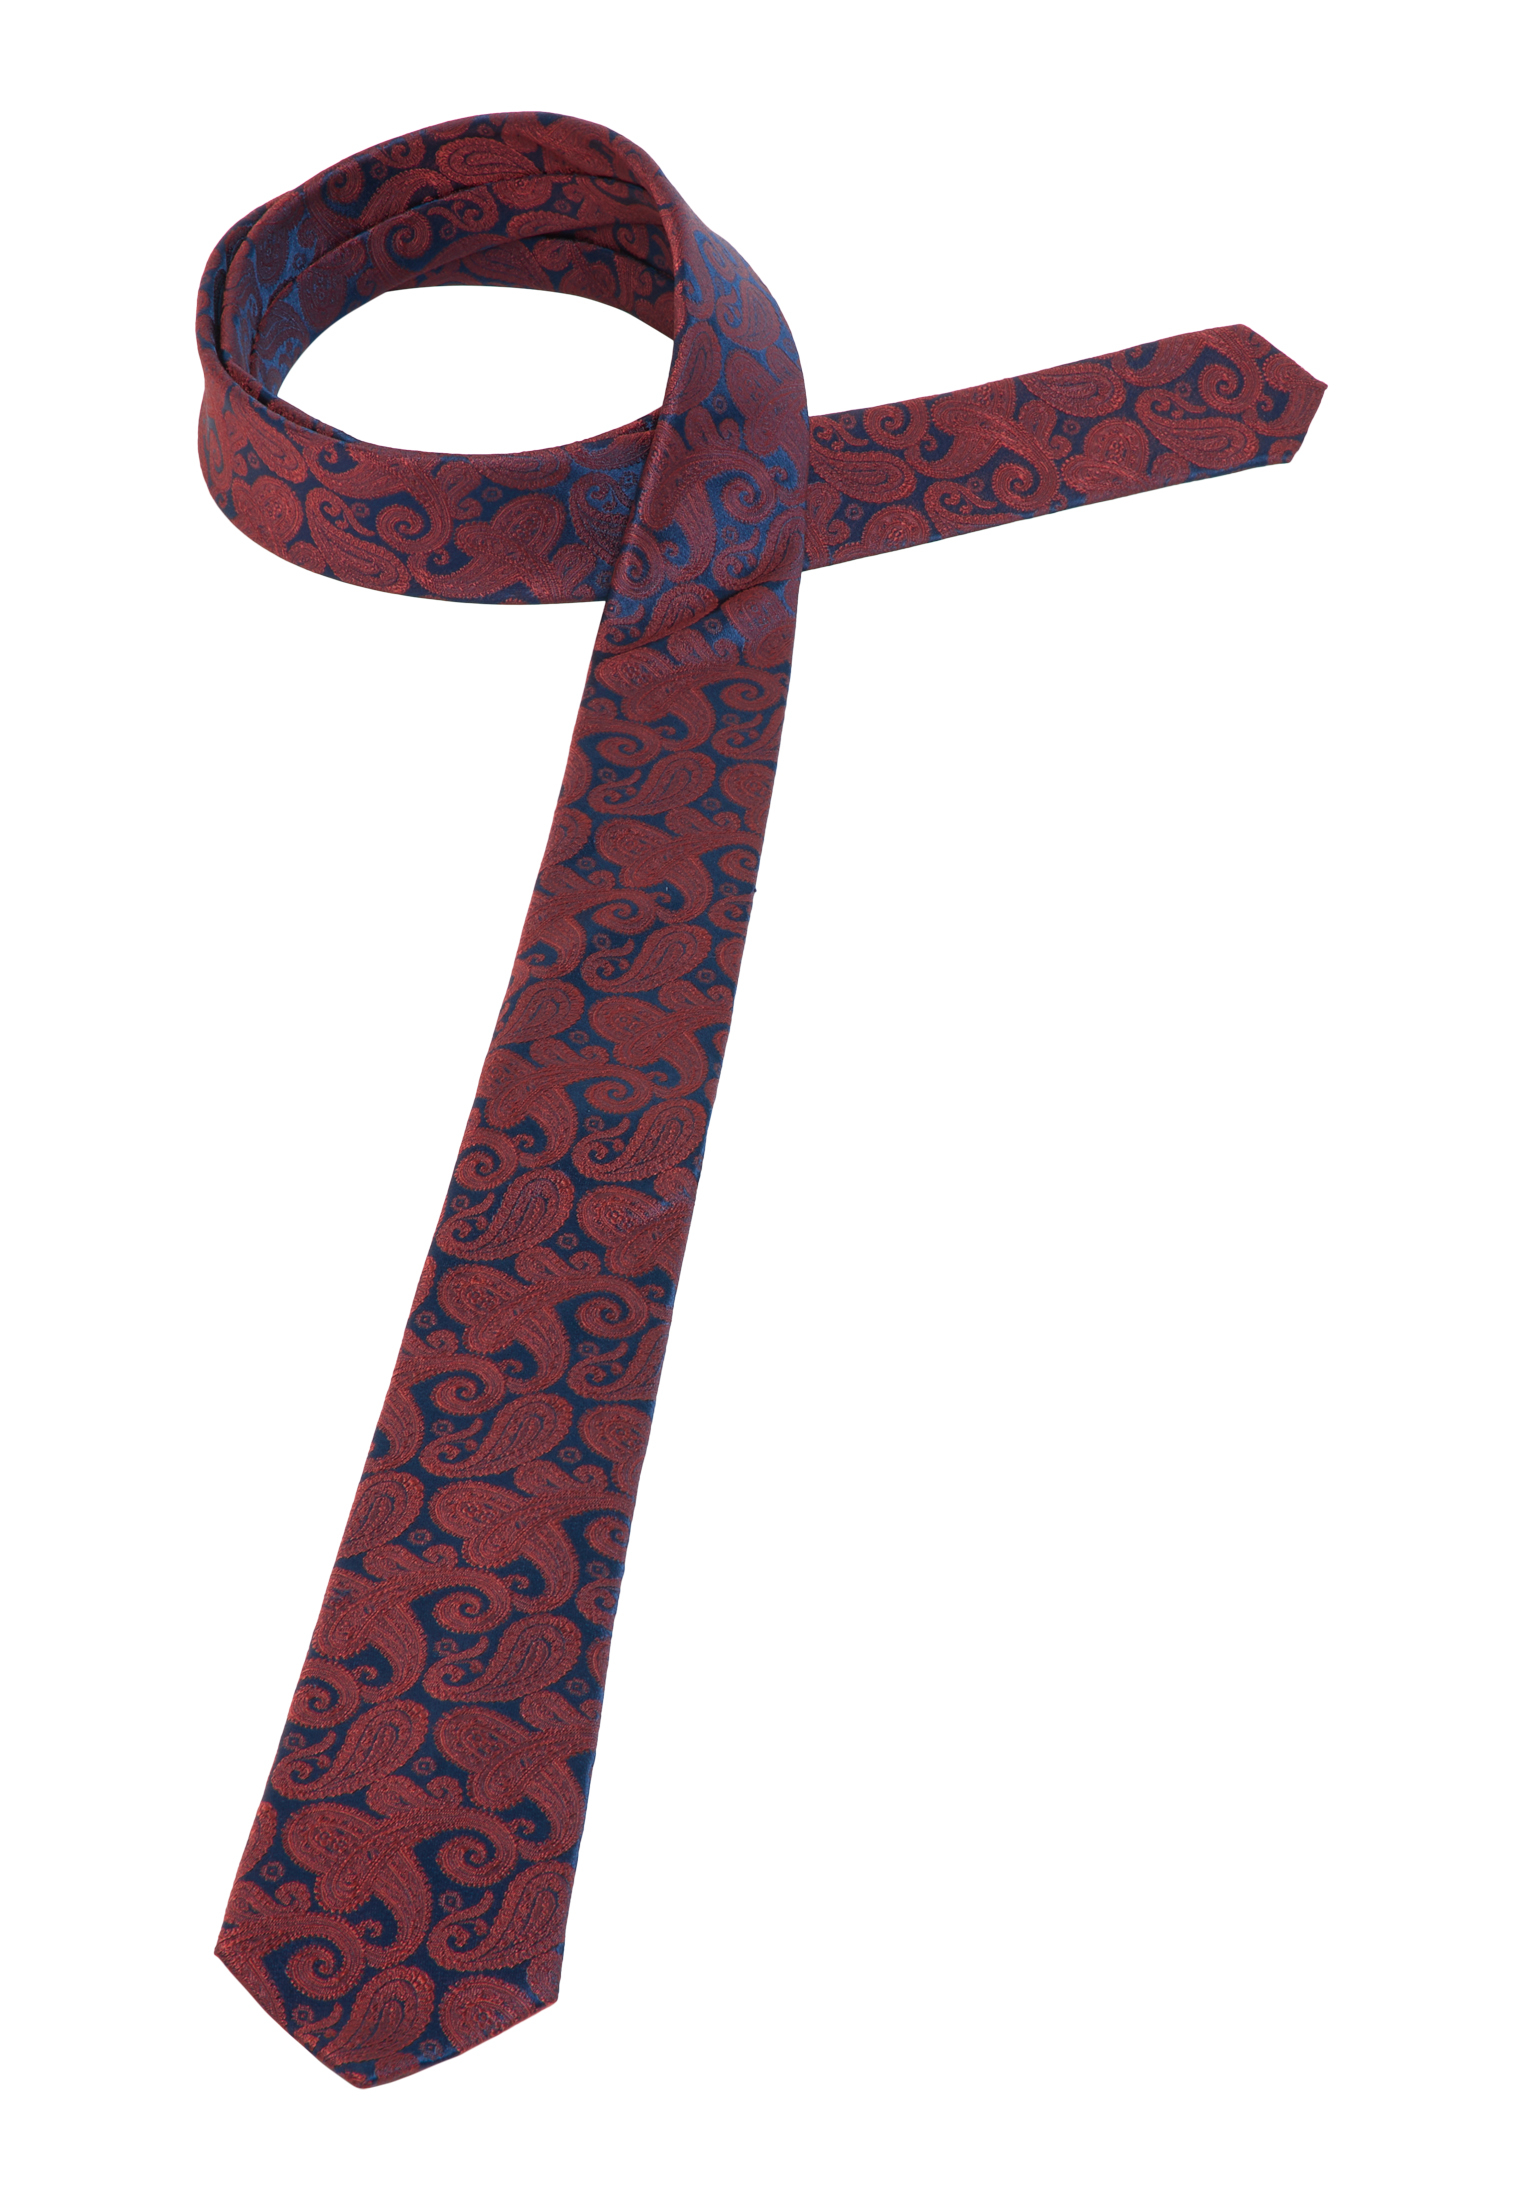 Krawatte in rusty red rusty 142 | | 1AC01904-05-63-142 red gemustert 